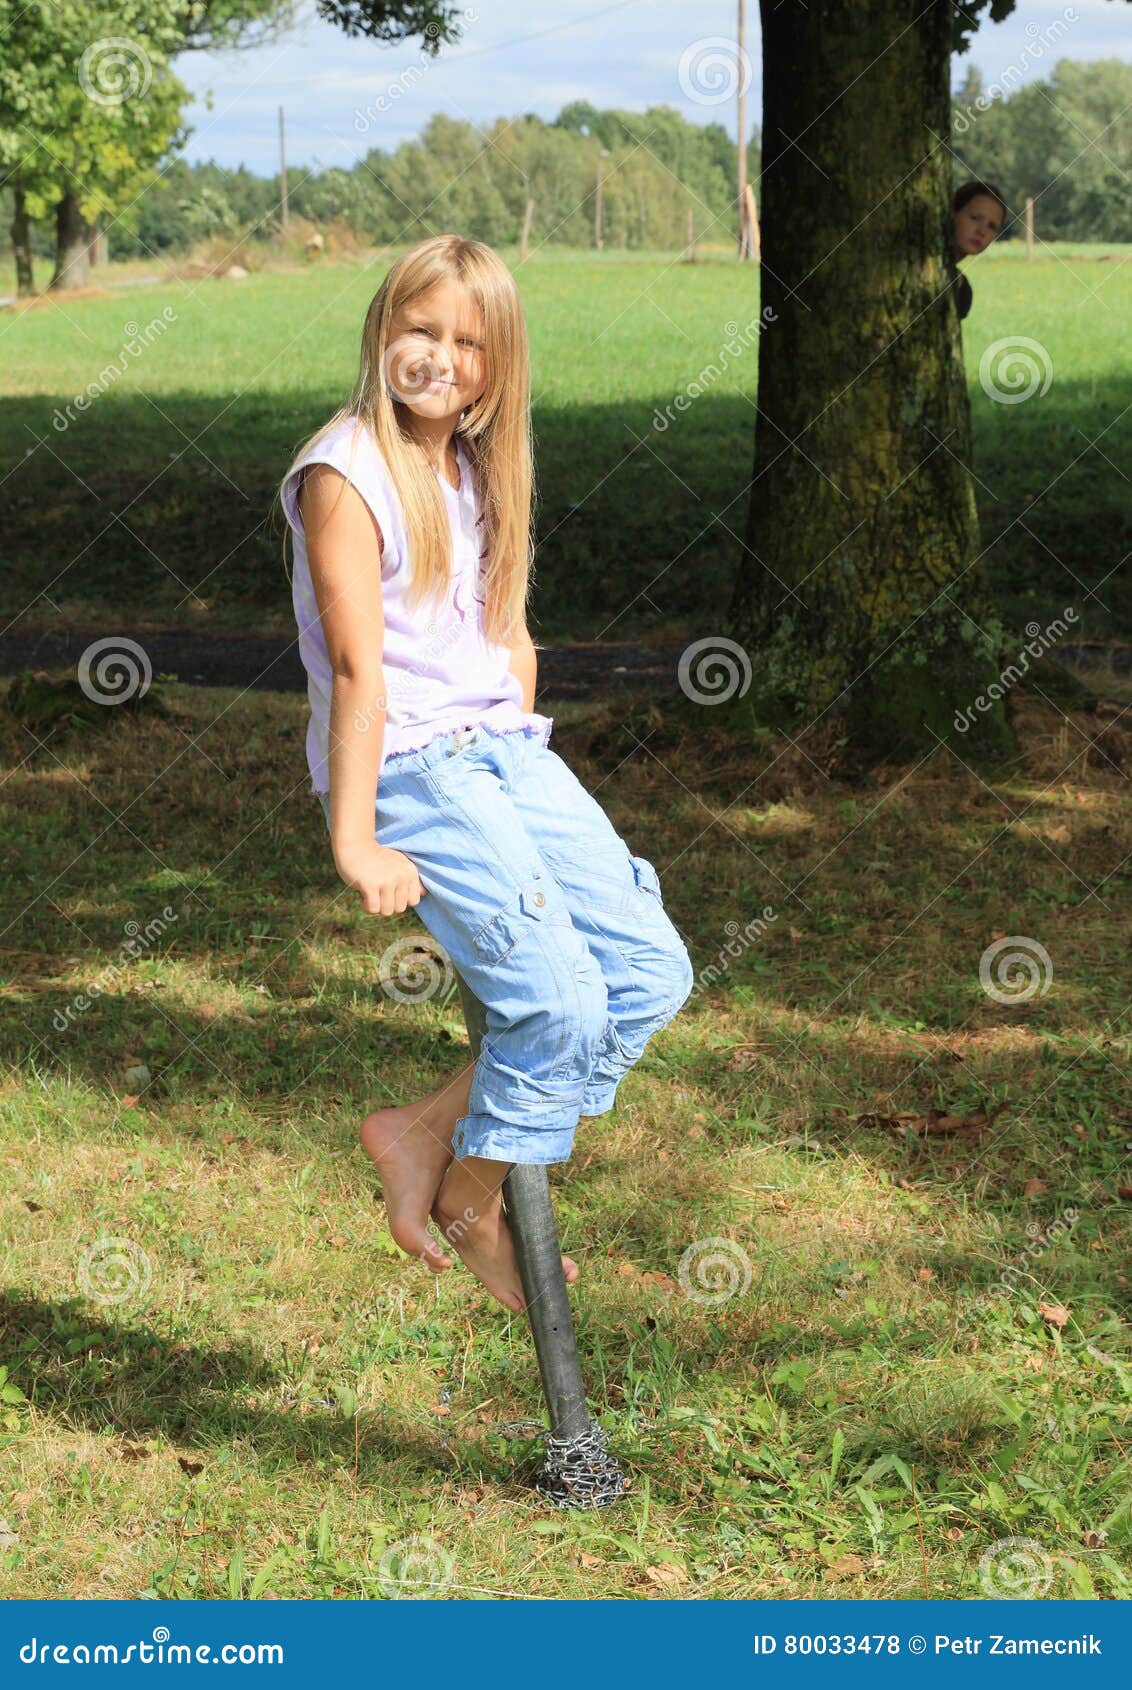 https://thumbs.dreamstime.com/z/girl-sitting-iron-pillar-barefoot-kid-young-smiling-hairy-blond-metal-meadow-keeping-balance-80033478.jpg